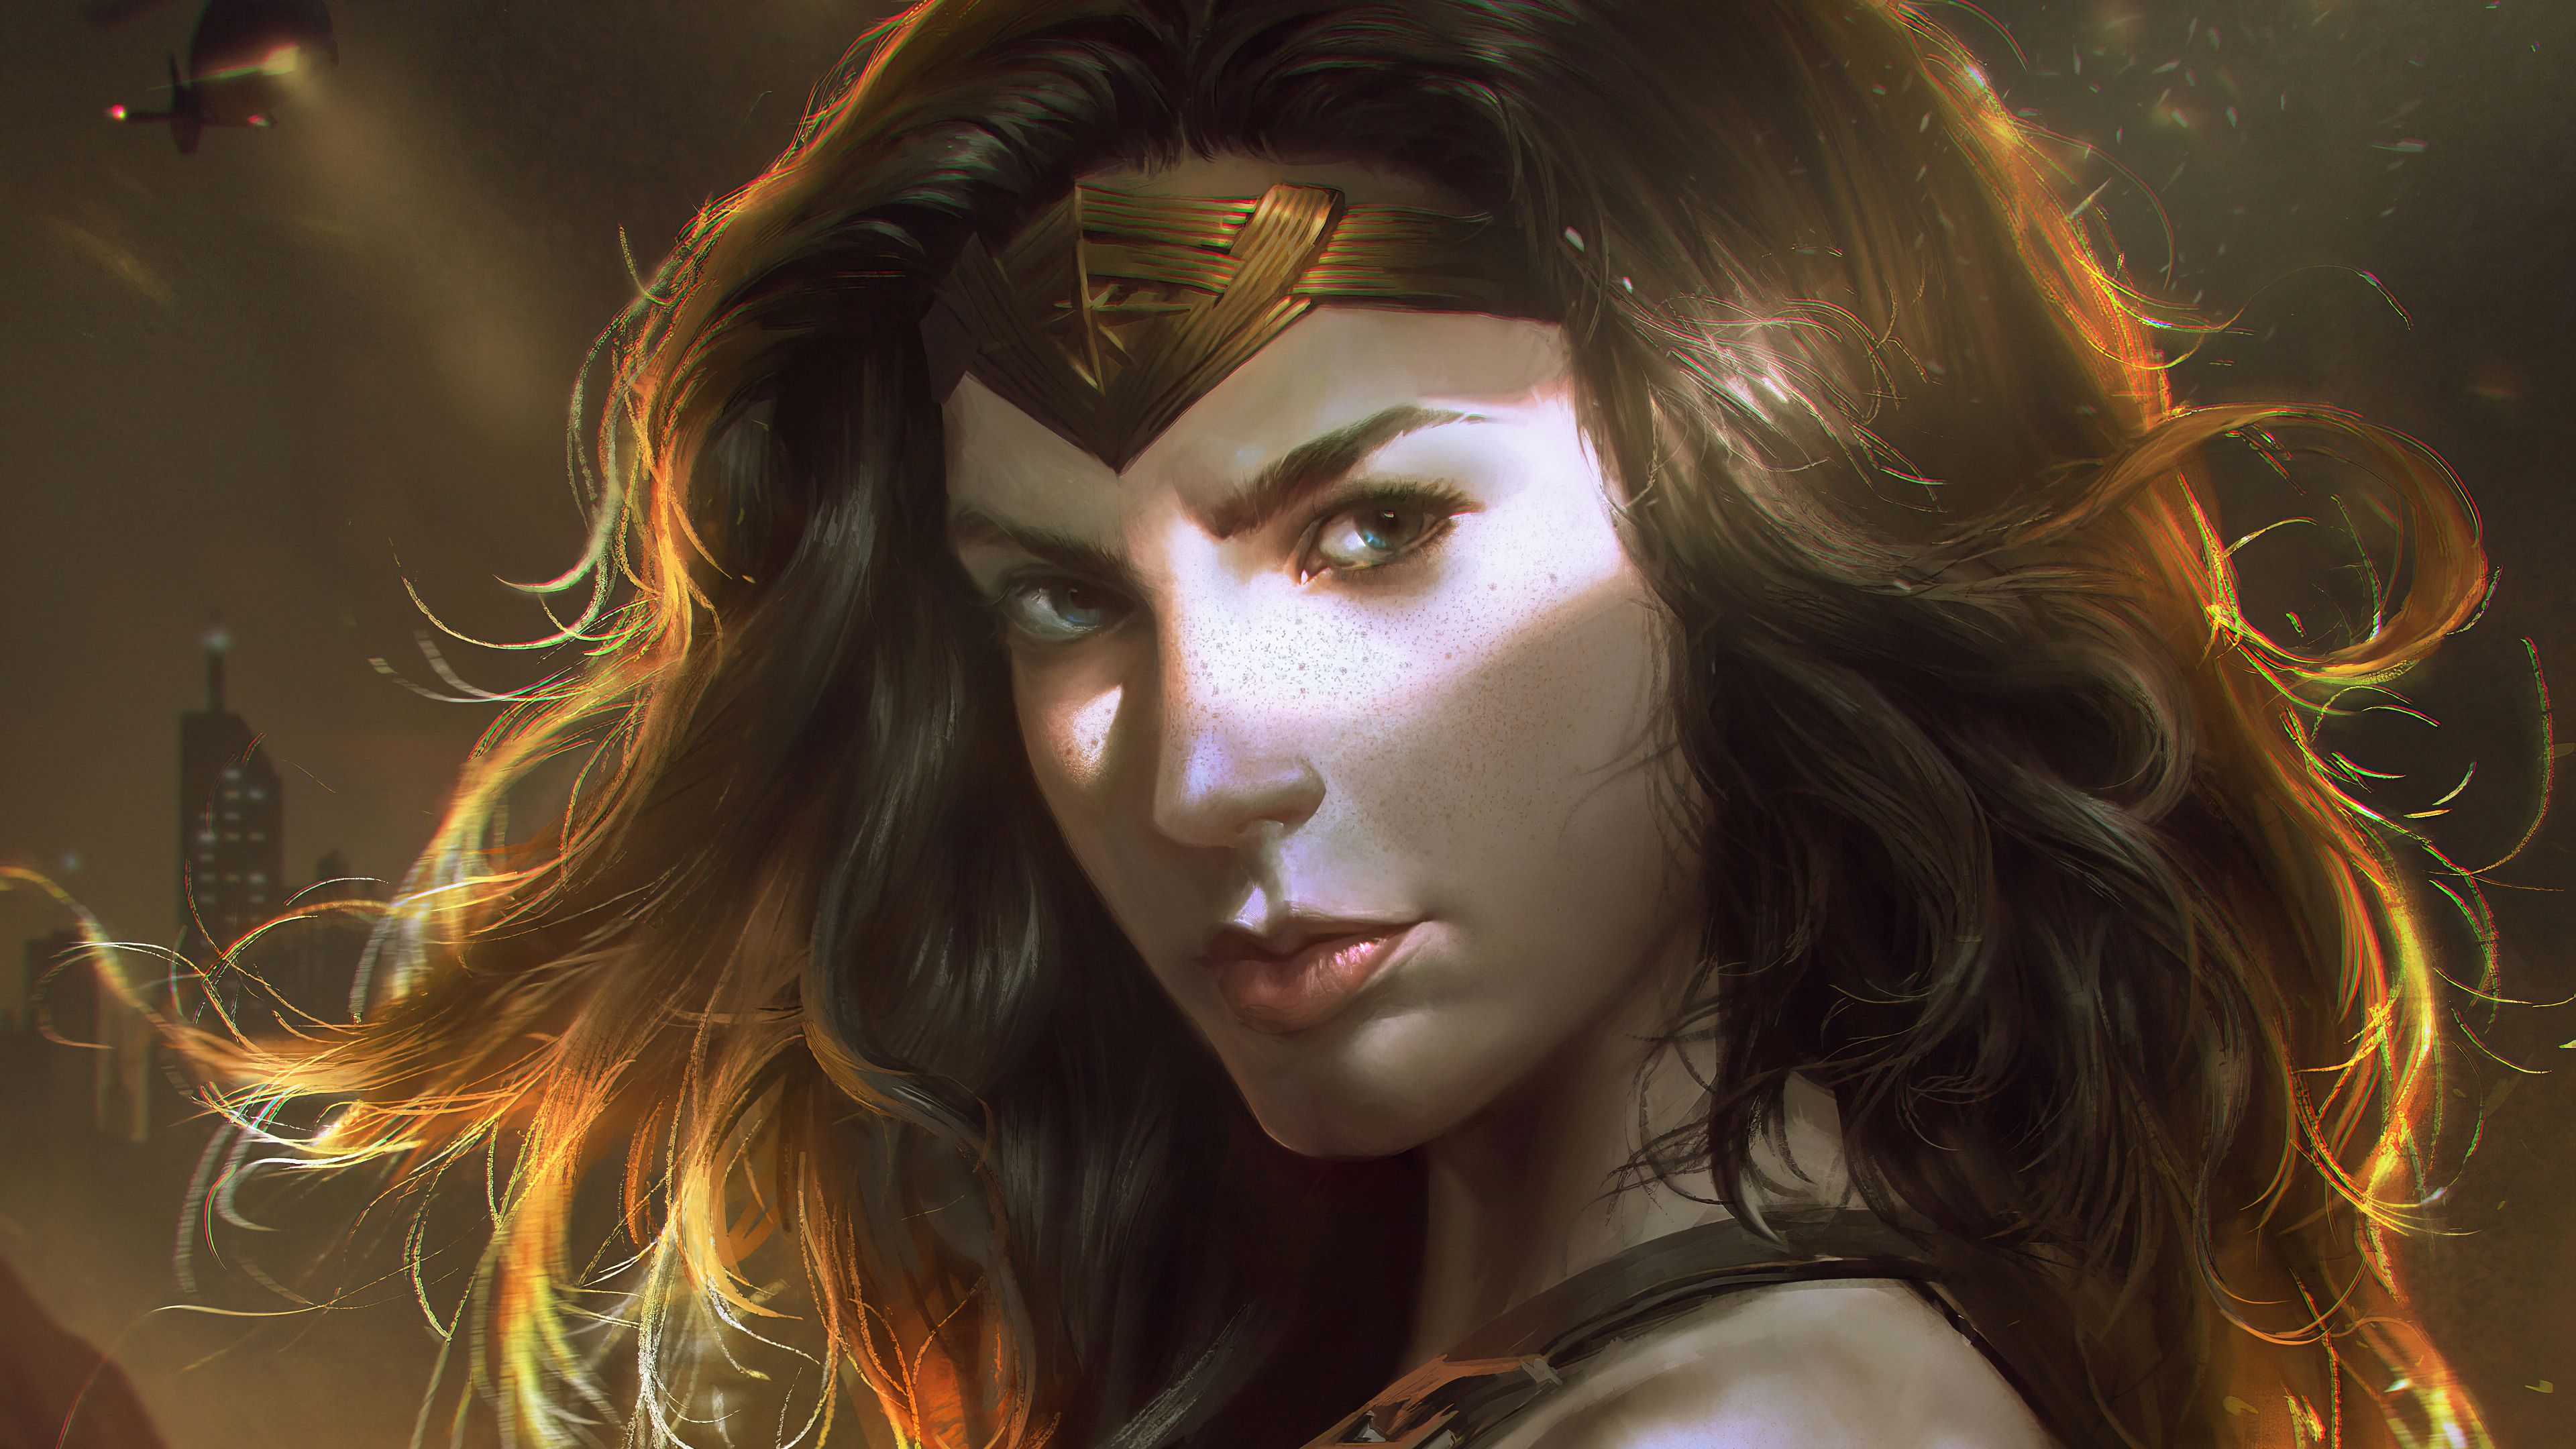 Face of Wonder Woman Wallpaper 4k Ultra HD